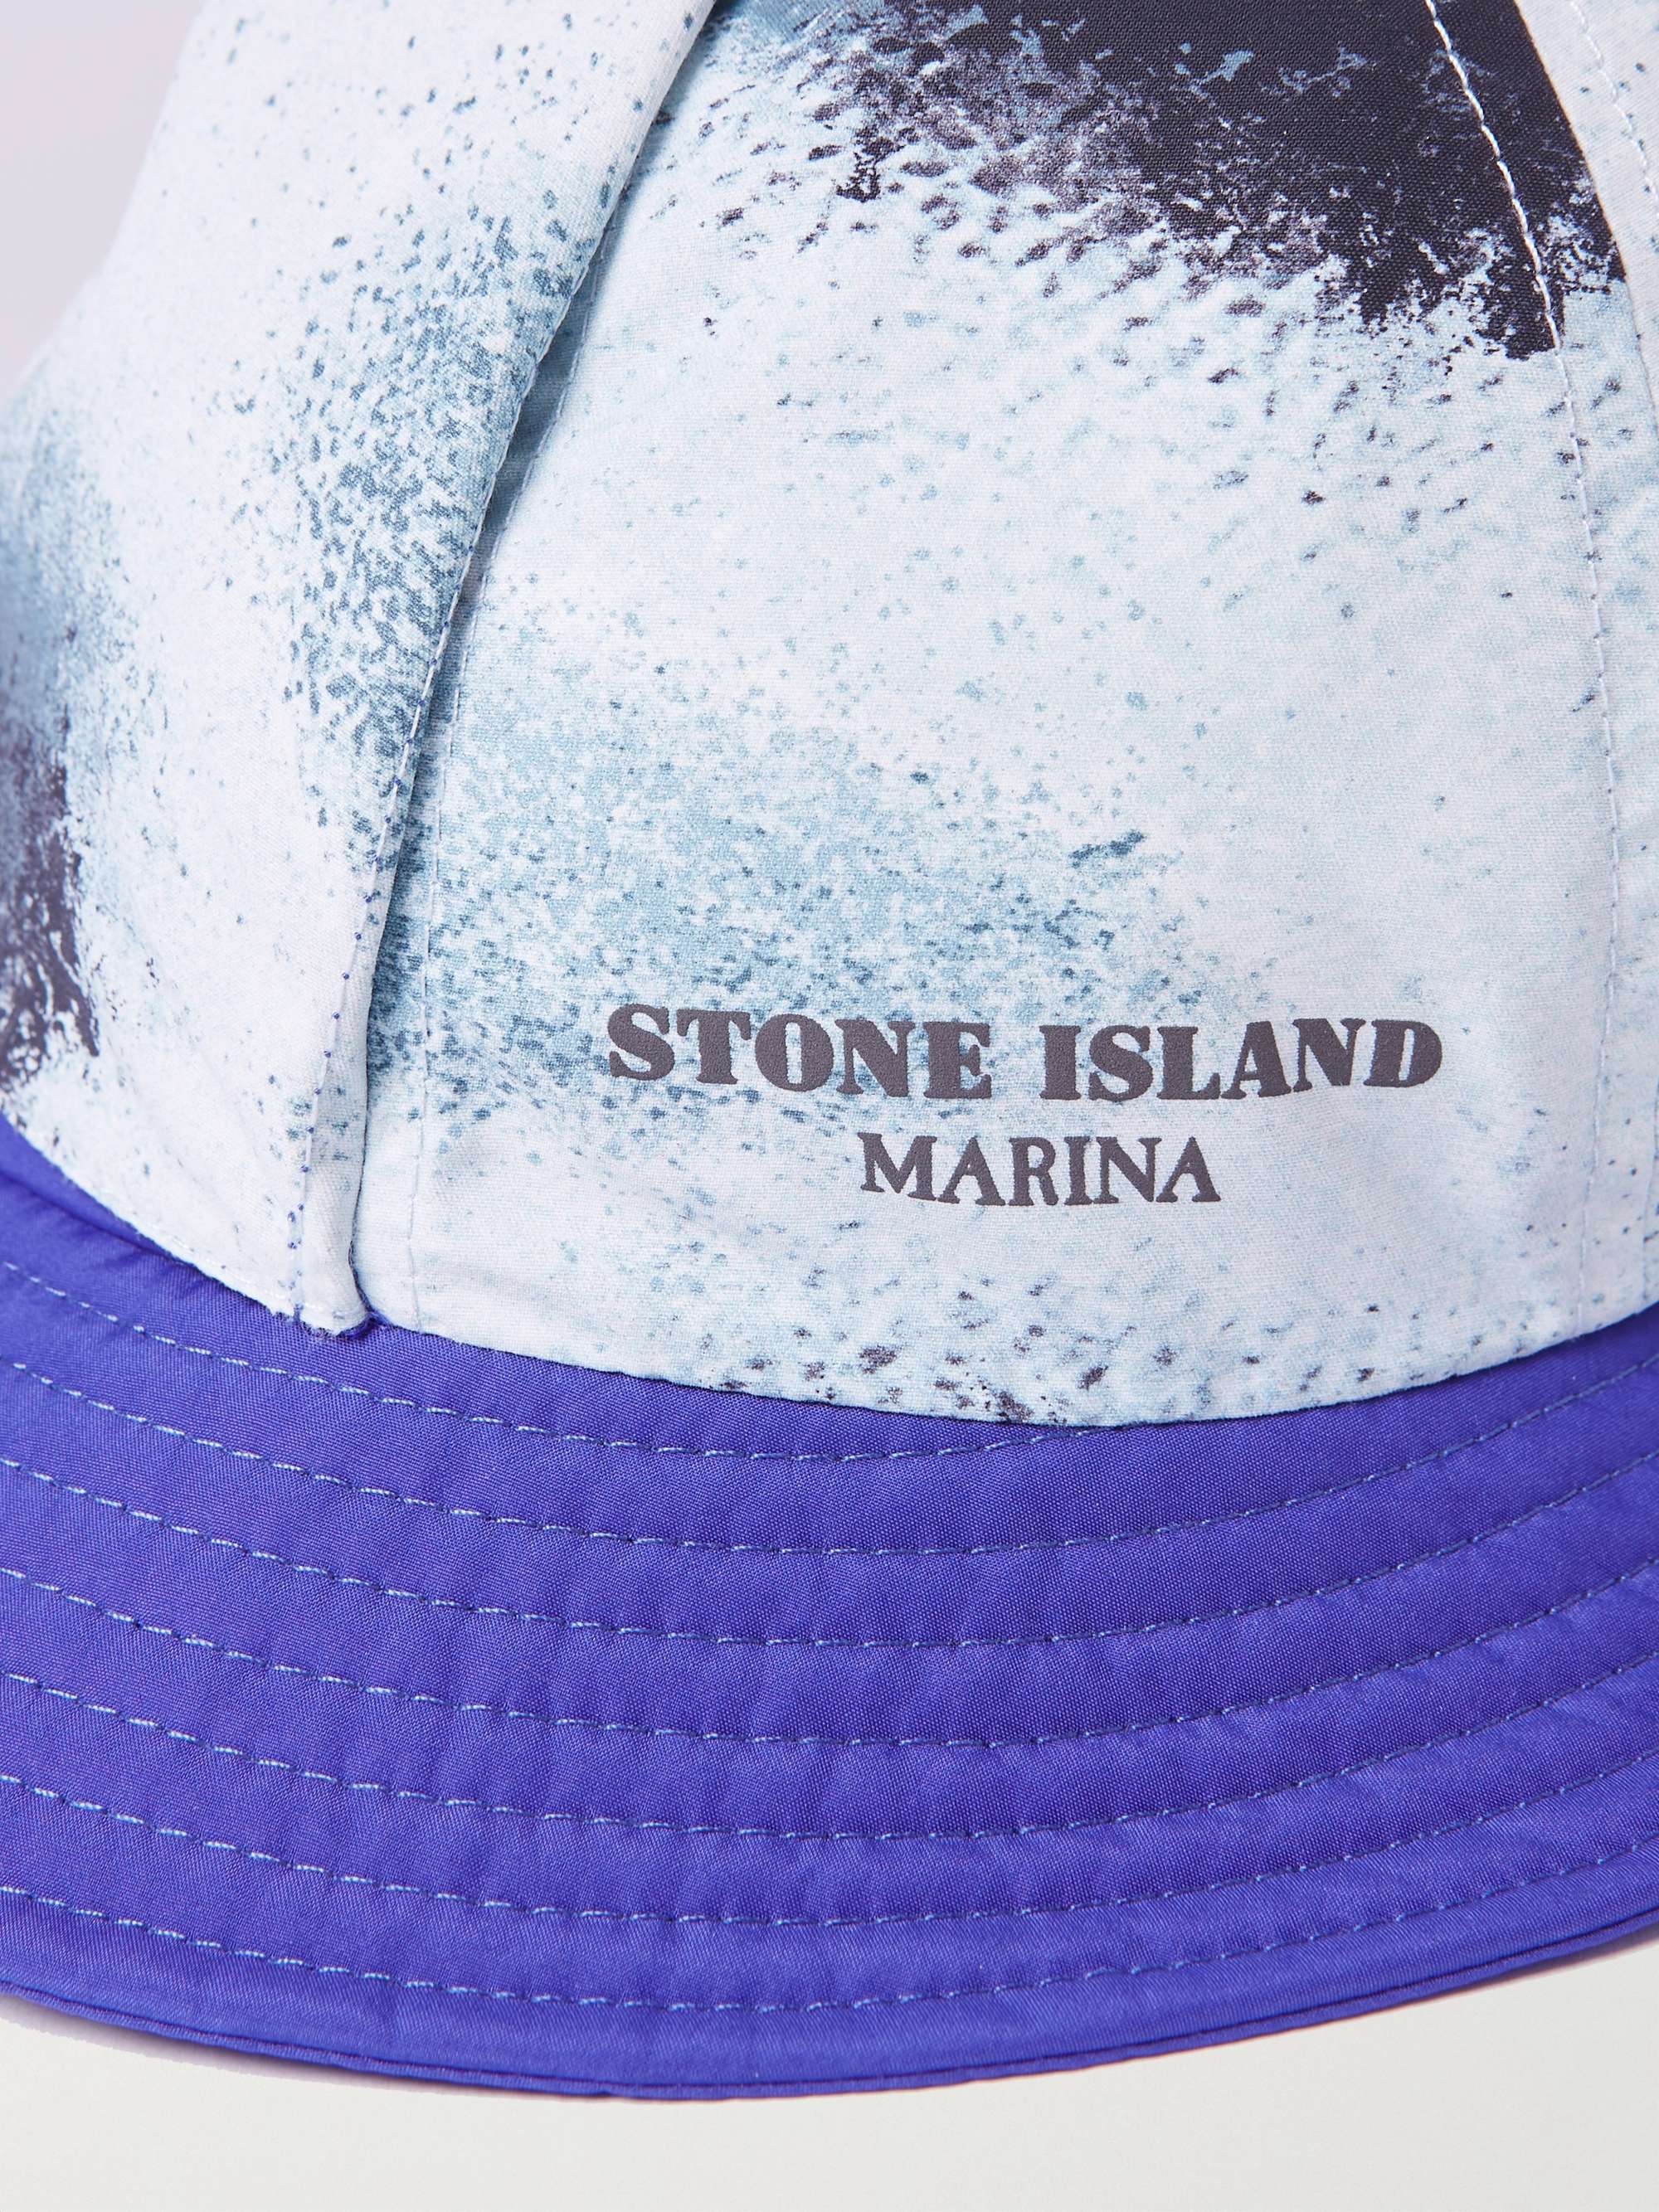 STONE ISLAND Marina Recycled GORE-TEX Bucket Hat